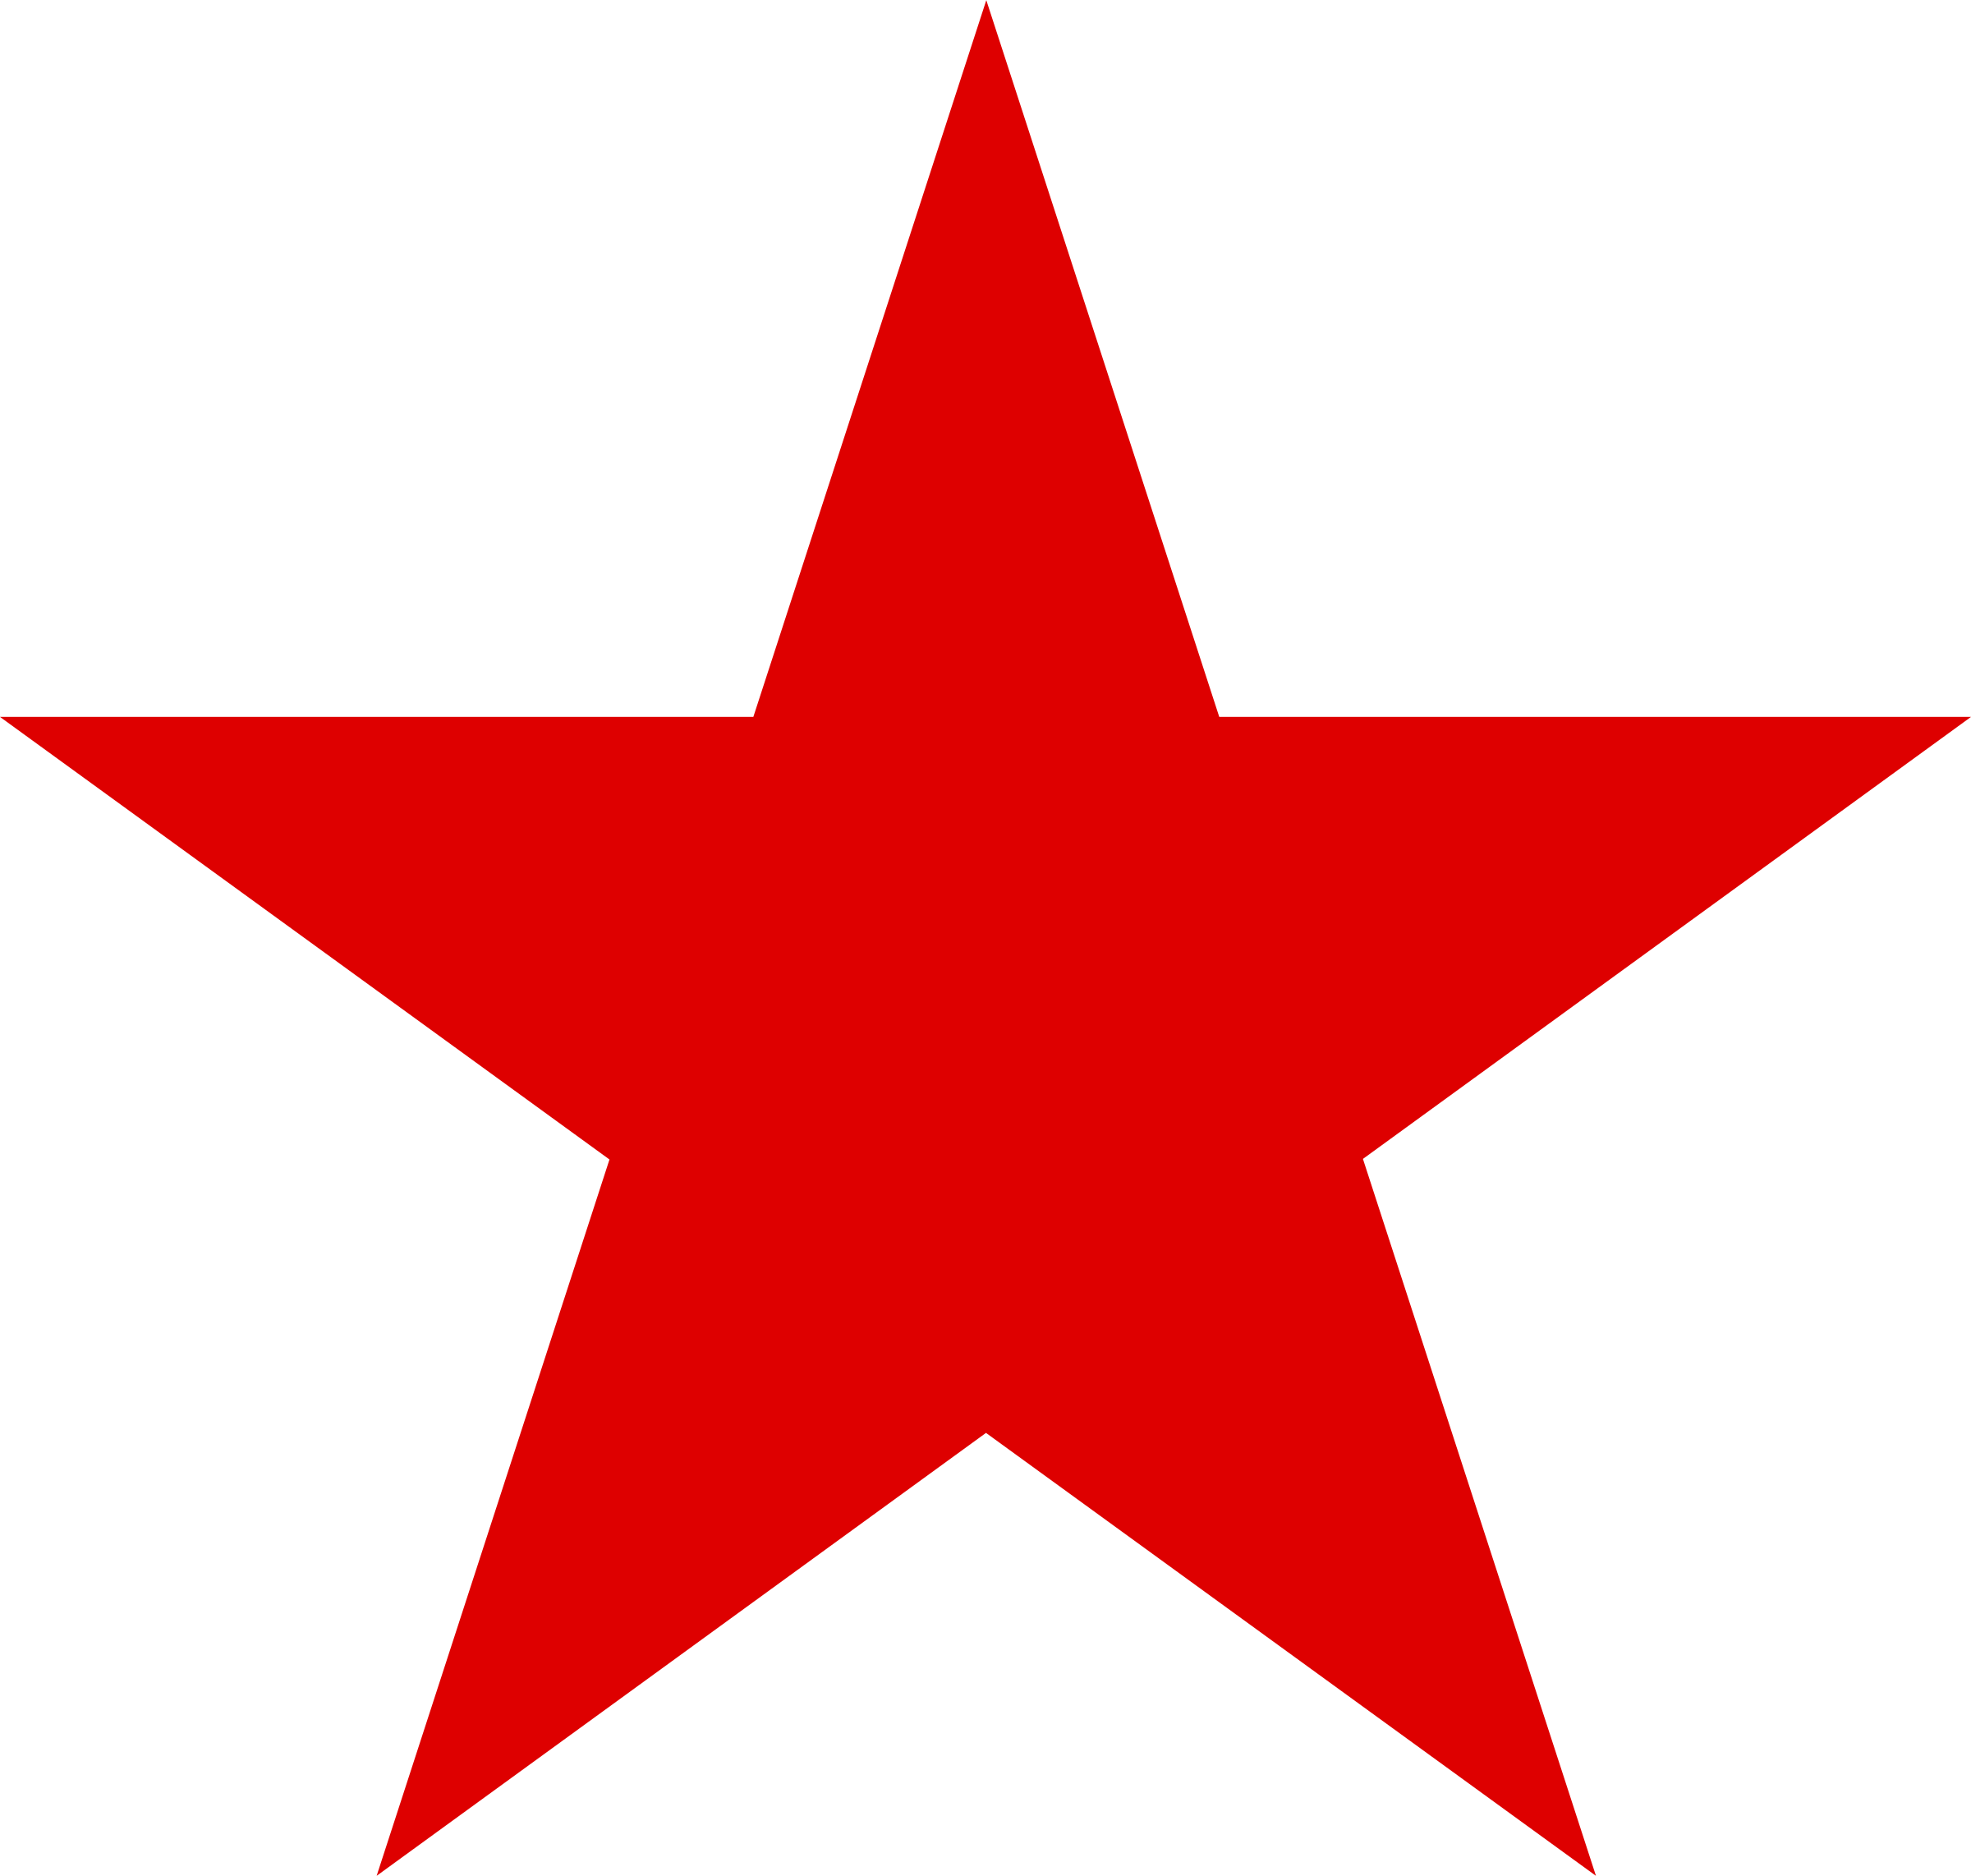 Star Logo - Red Star Logo PNG Transparent & SVG Vector - Freebie Supply